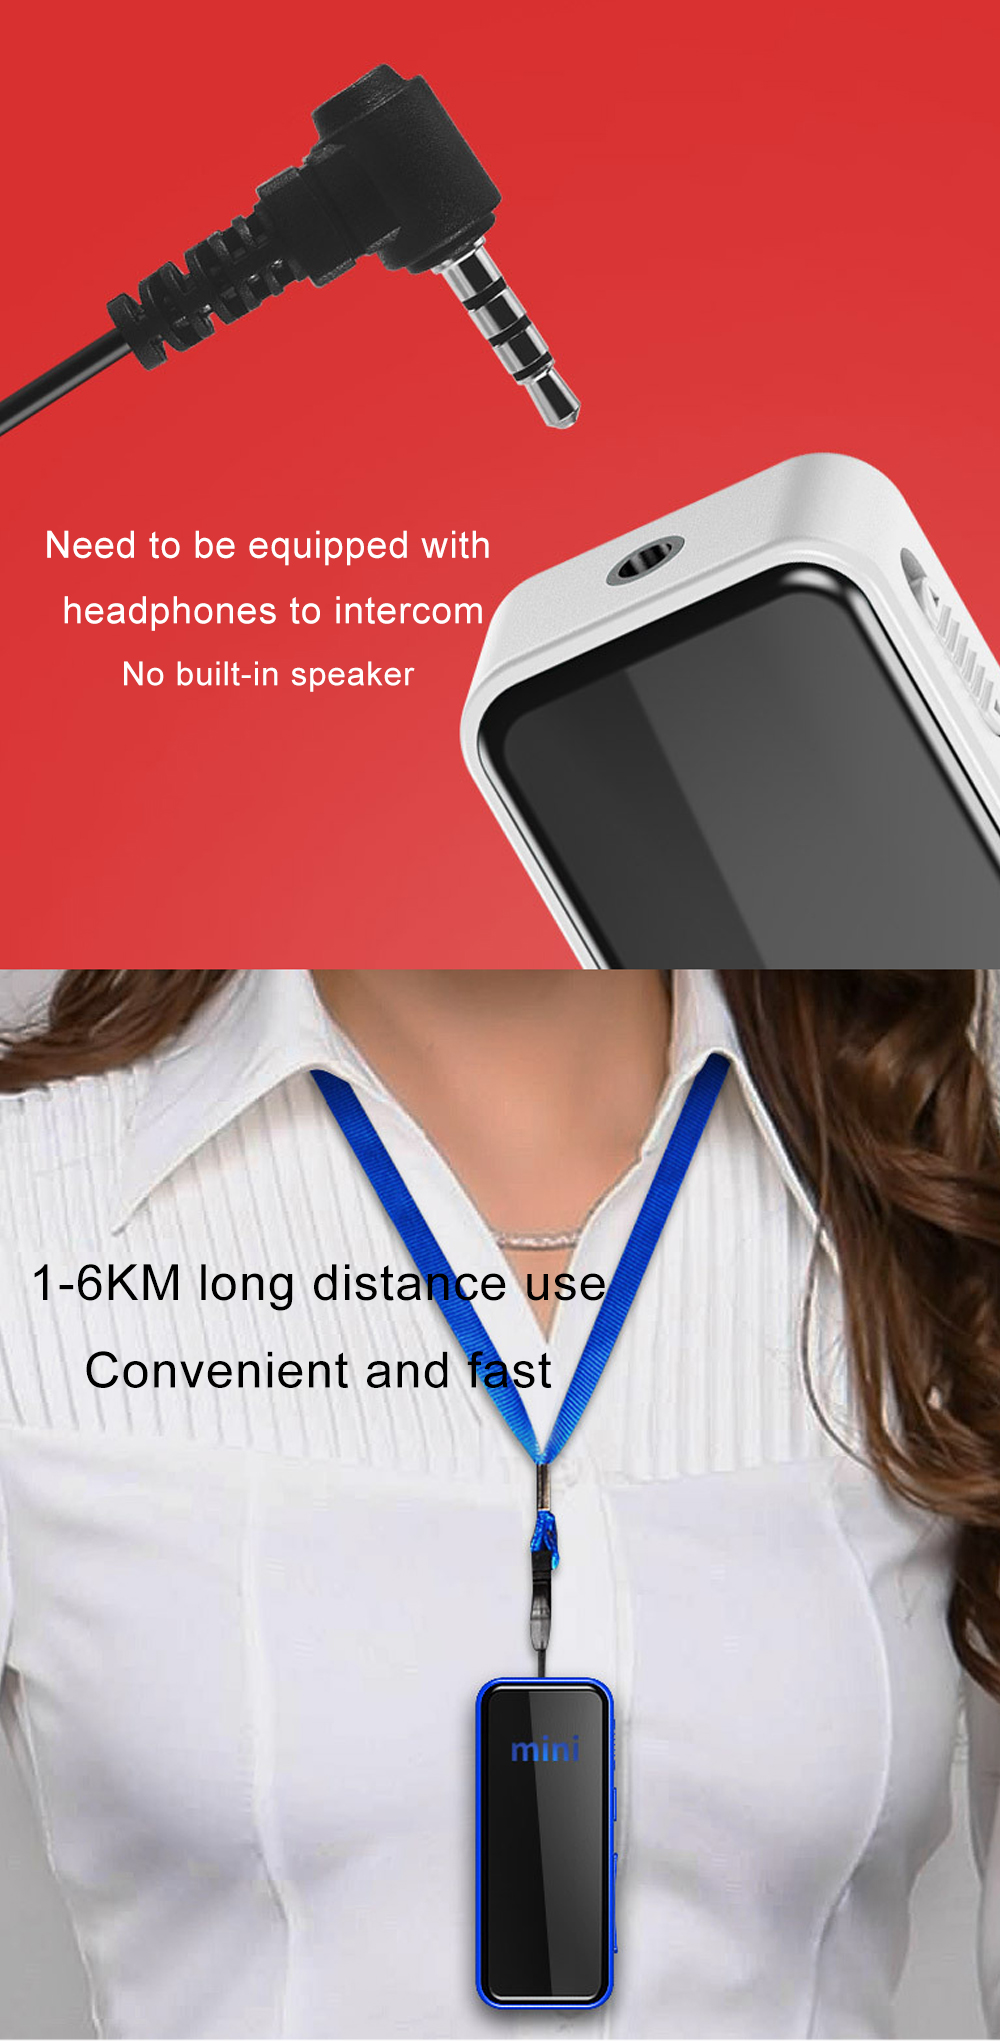 THINKYOUNG-900mAh-Micro-Walkie-Talkie-400-480MHz-Mini-Portable-Civilian-Wireless-Intercom-USB-Chargi-1902852-3